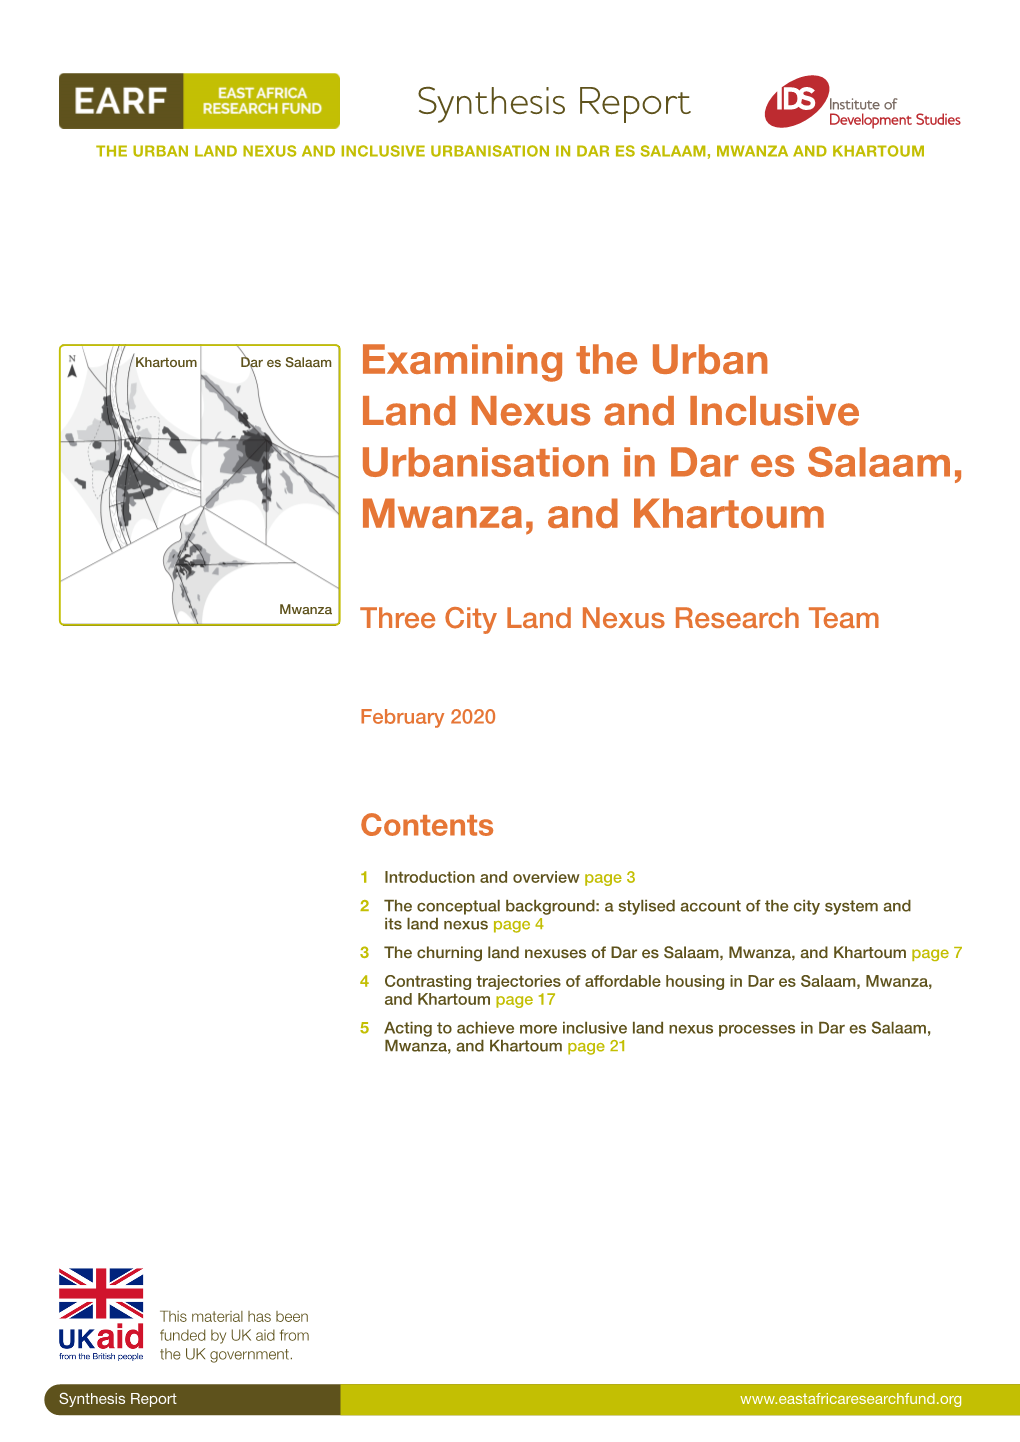 Examining the Urban Land Nexus and Inclusive Urbanisation in Dar Es Salaam, Mwanza, and Khartoum